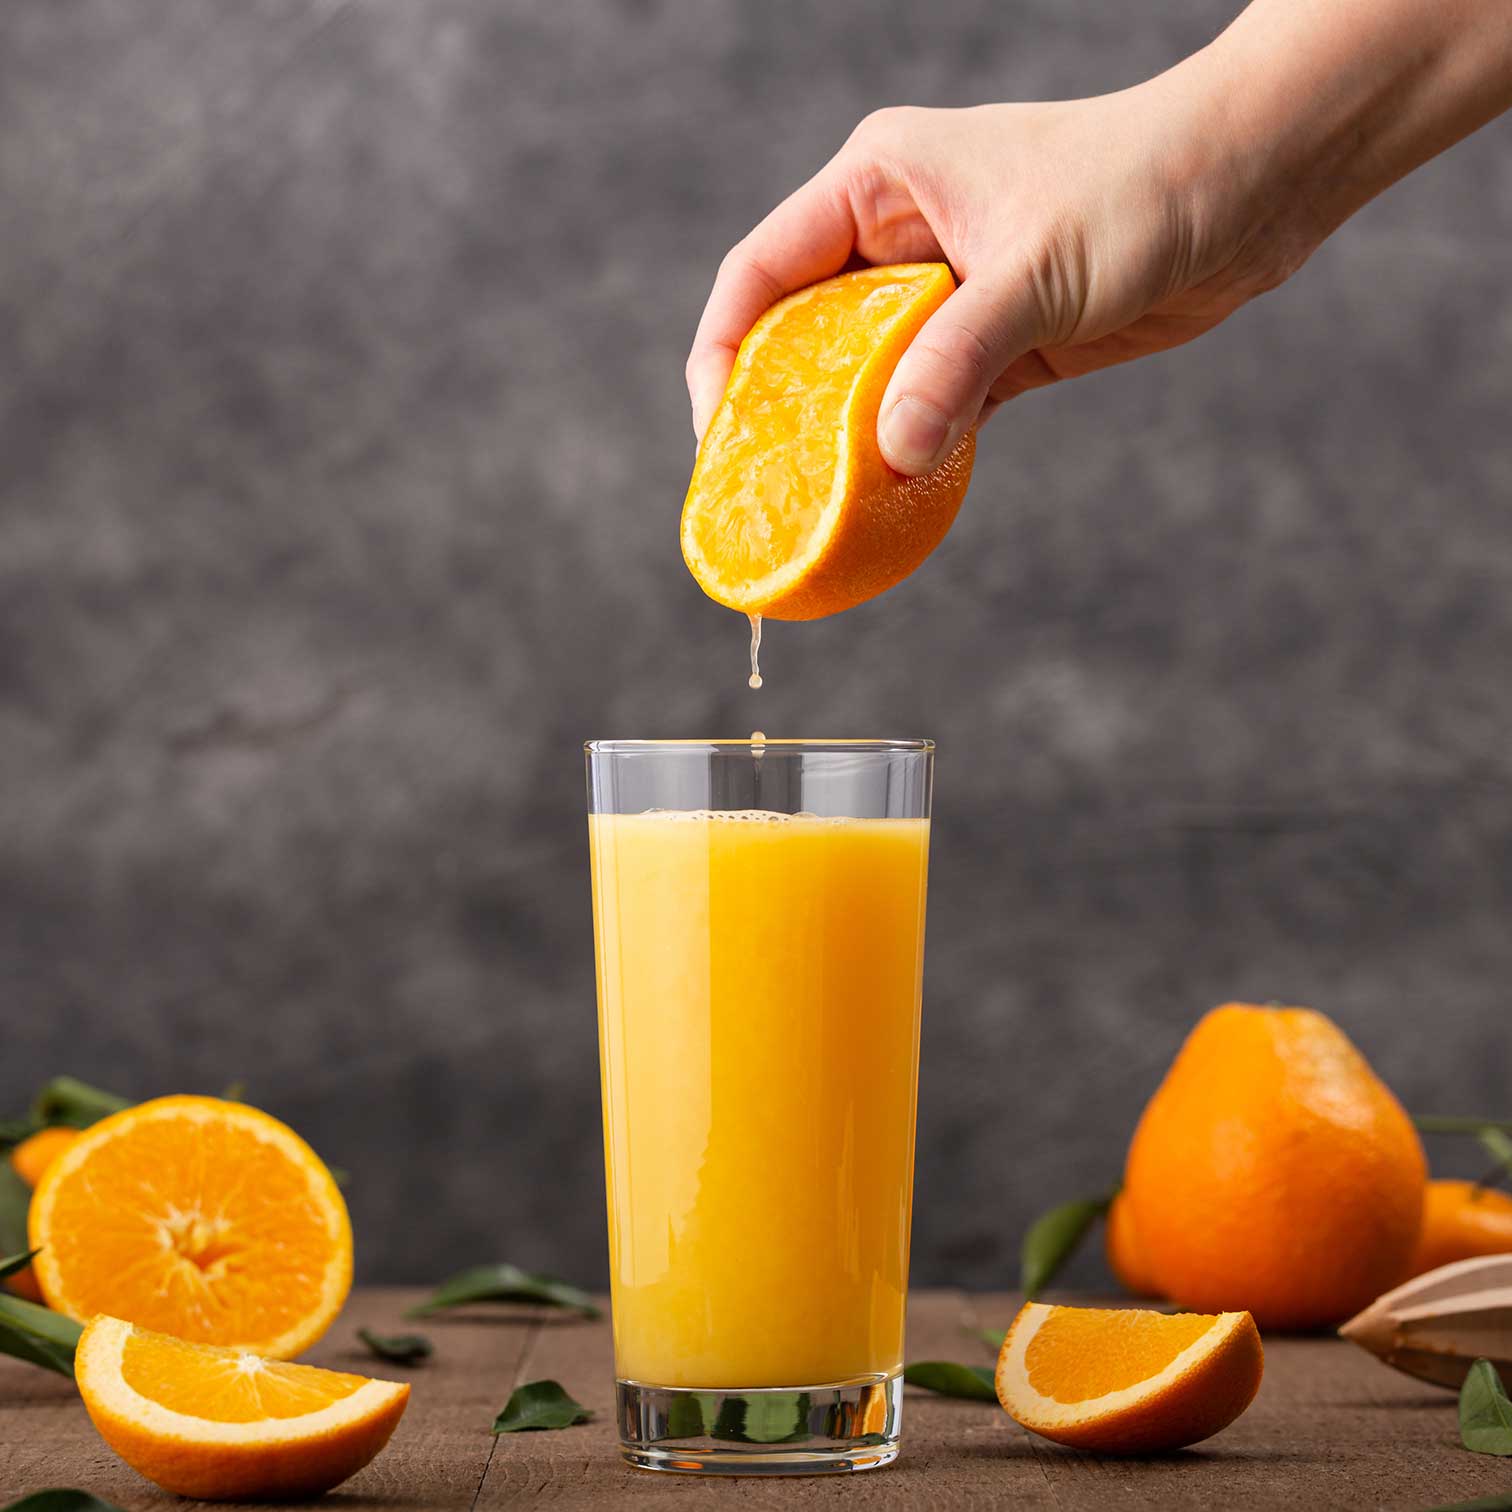 naga taze sikilmis portakal suyu